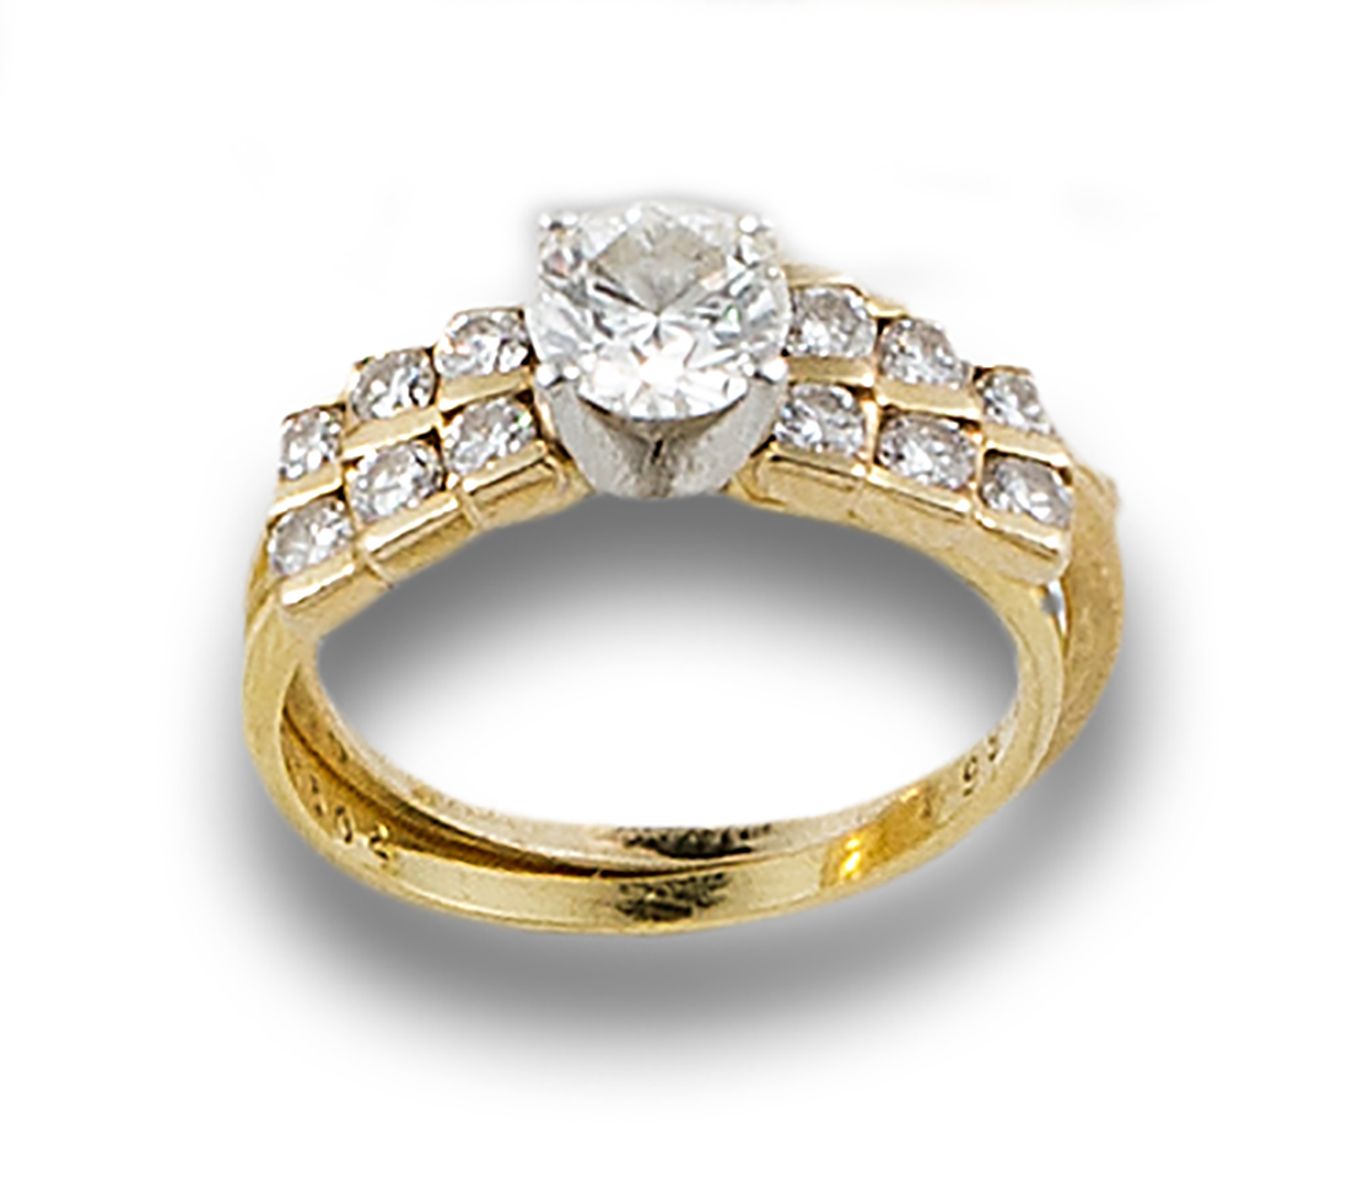 18 kt yellow gold solitaire ring. Mit zentralem Diamanten, Brillantschliff, gesc&hellip;